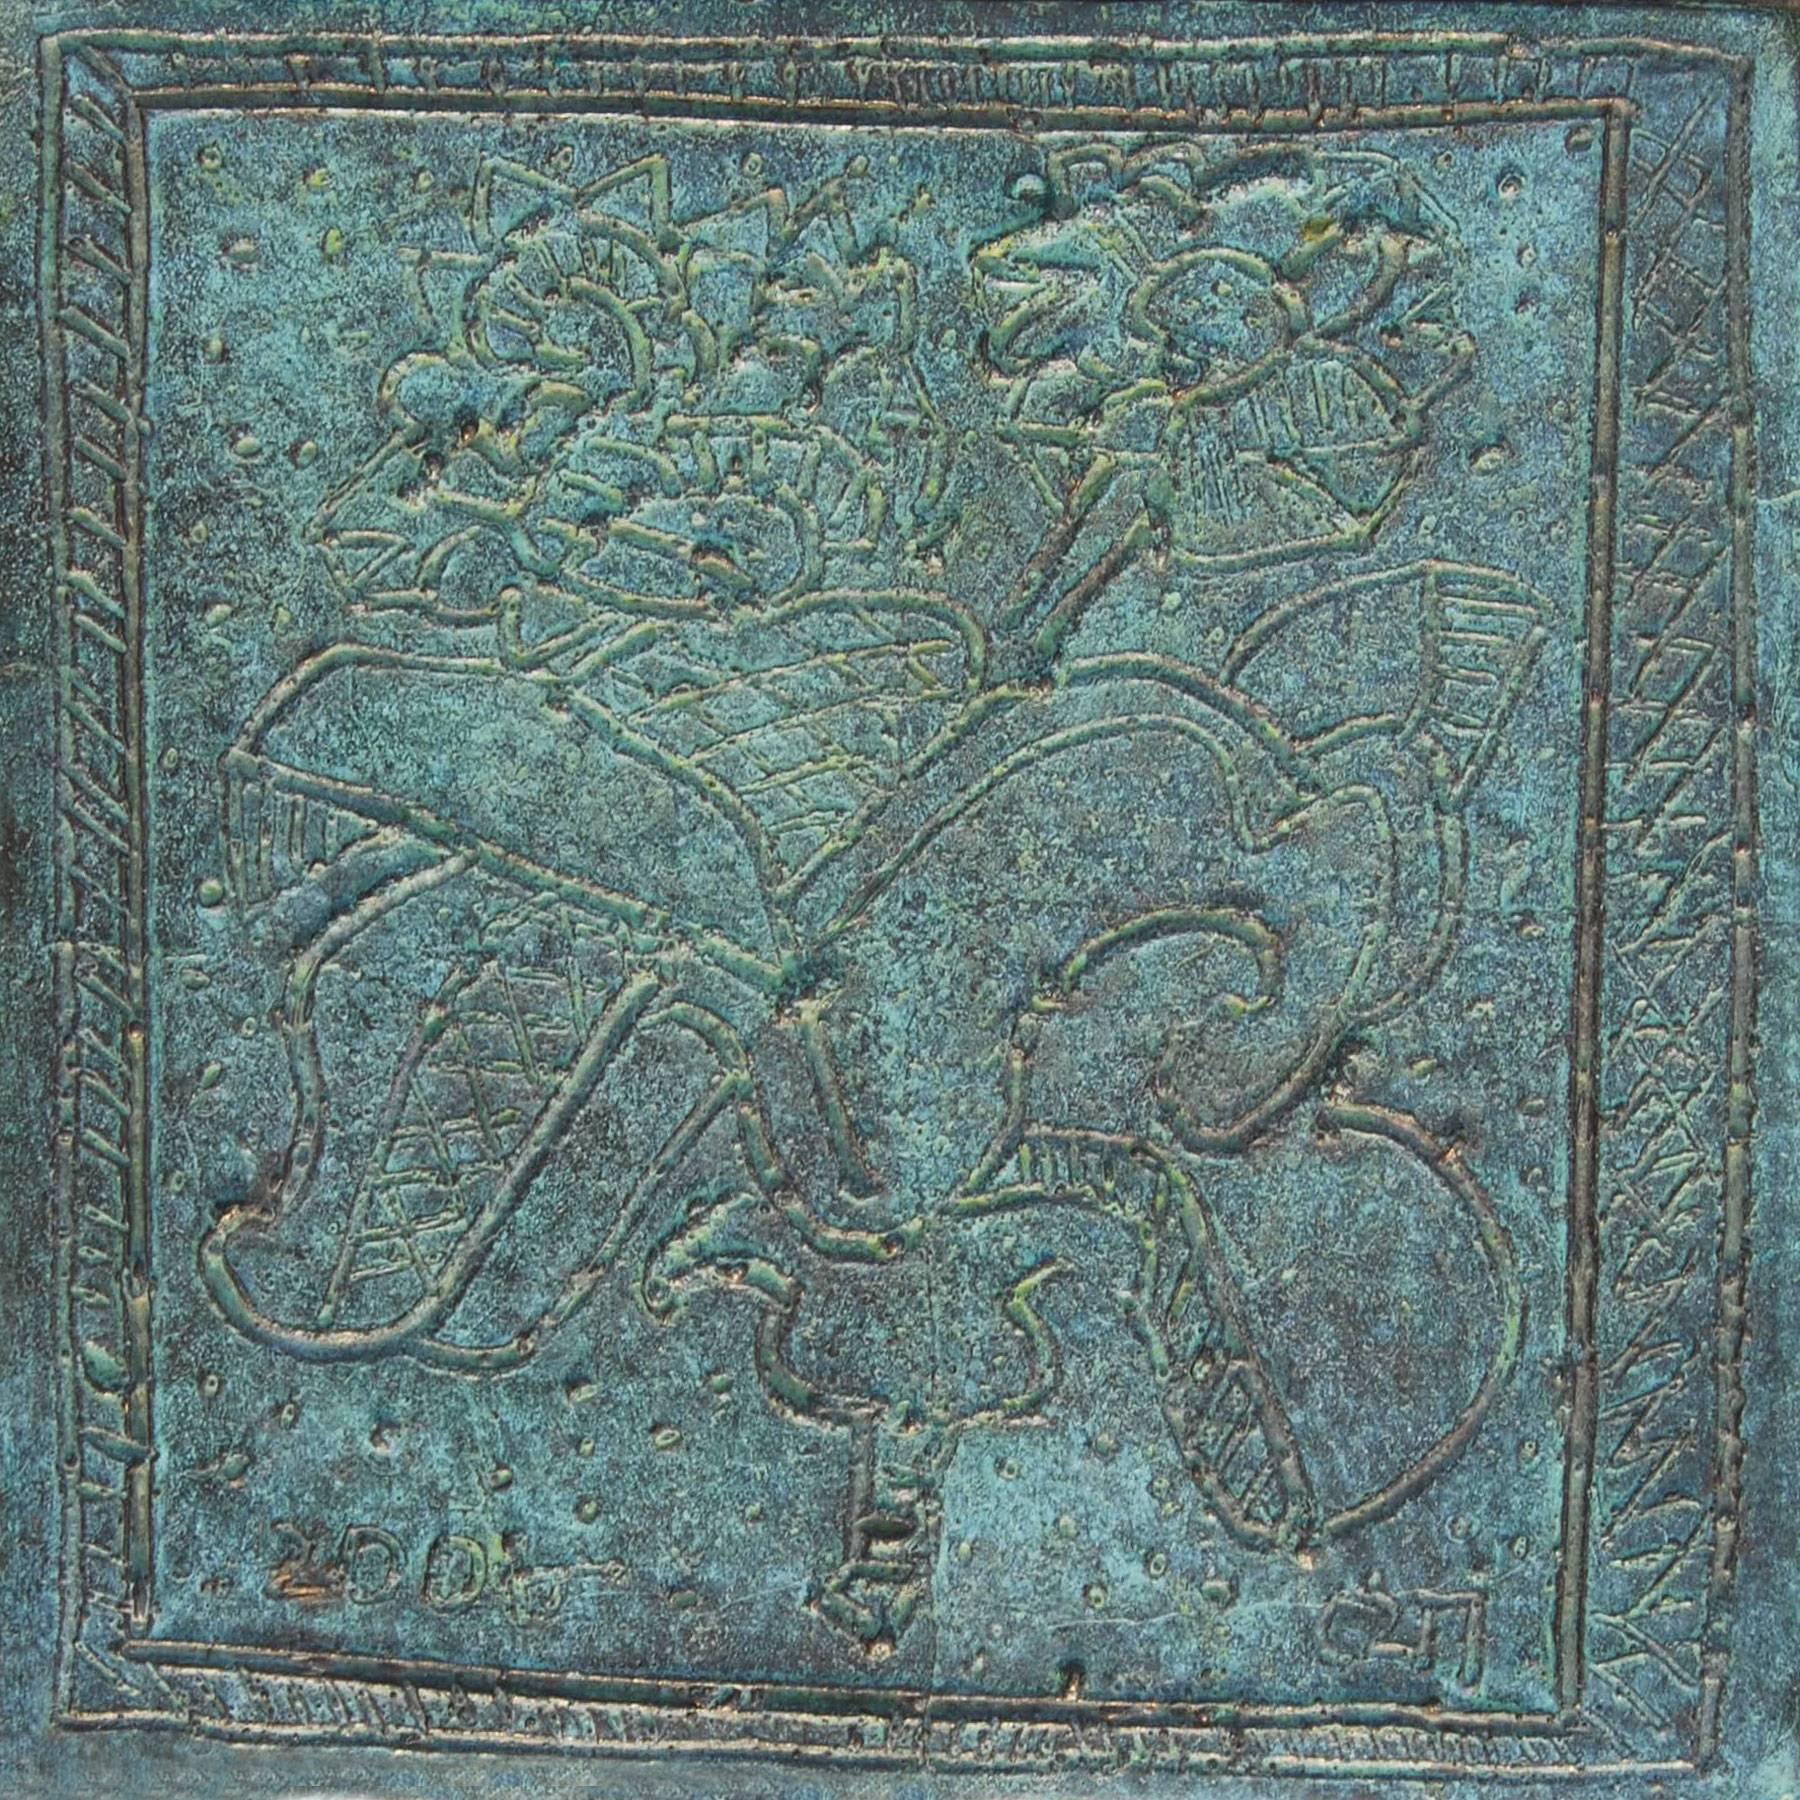 Jogen Chowdhury  Still-Life Sculpture - Flower Vase, Still Life, Bronze Plate, Green by Artist of 21st Century"In Stock"